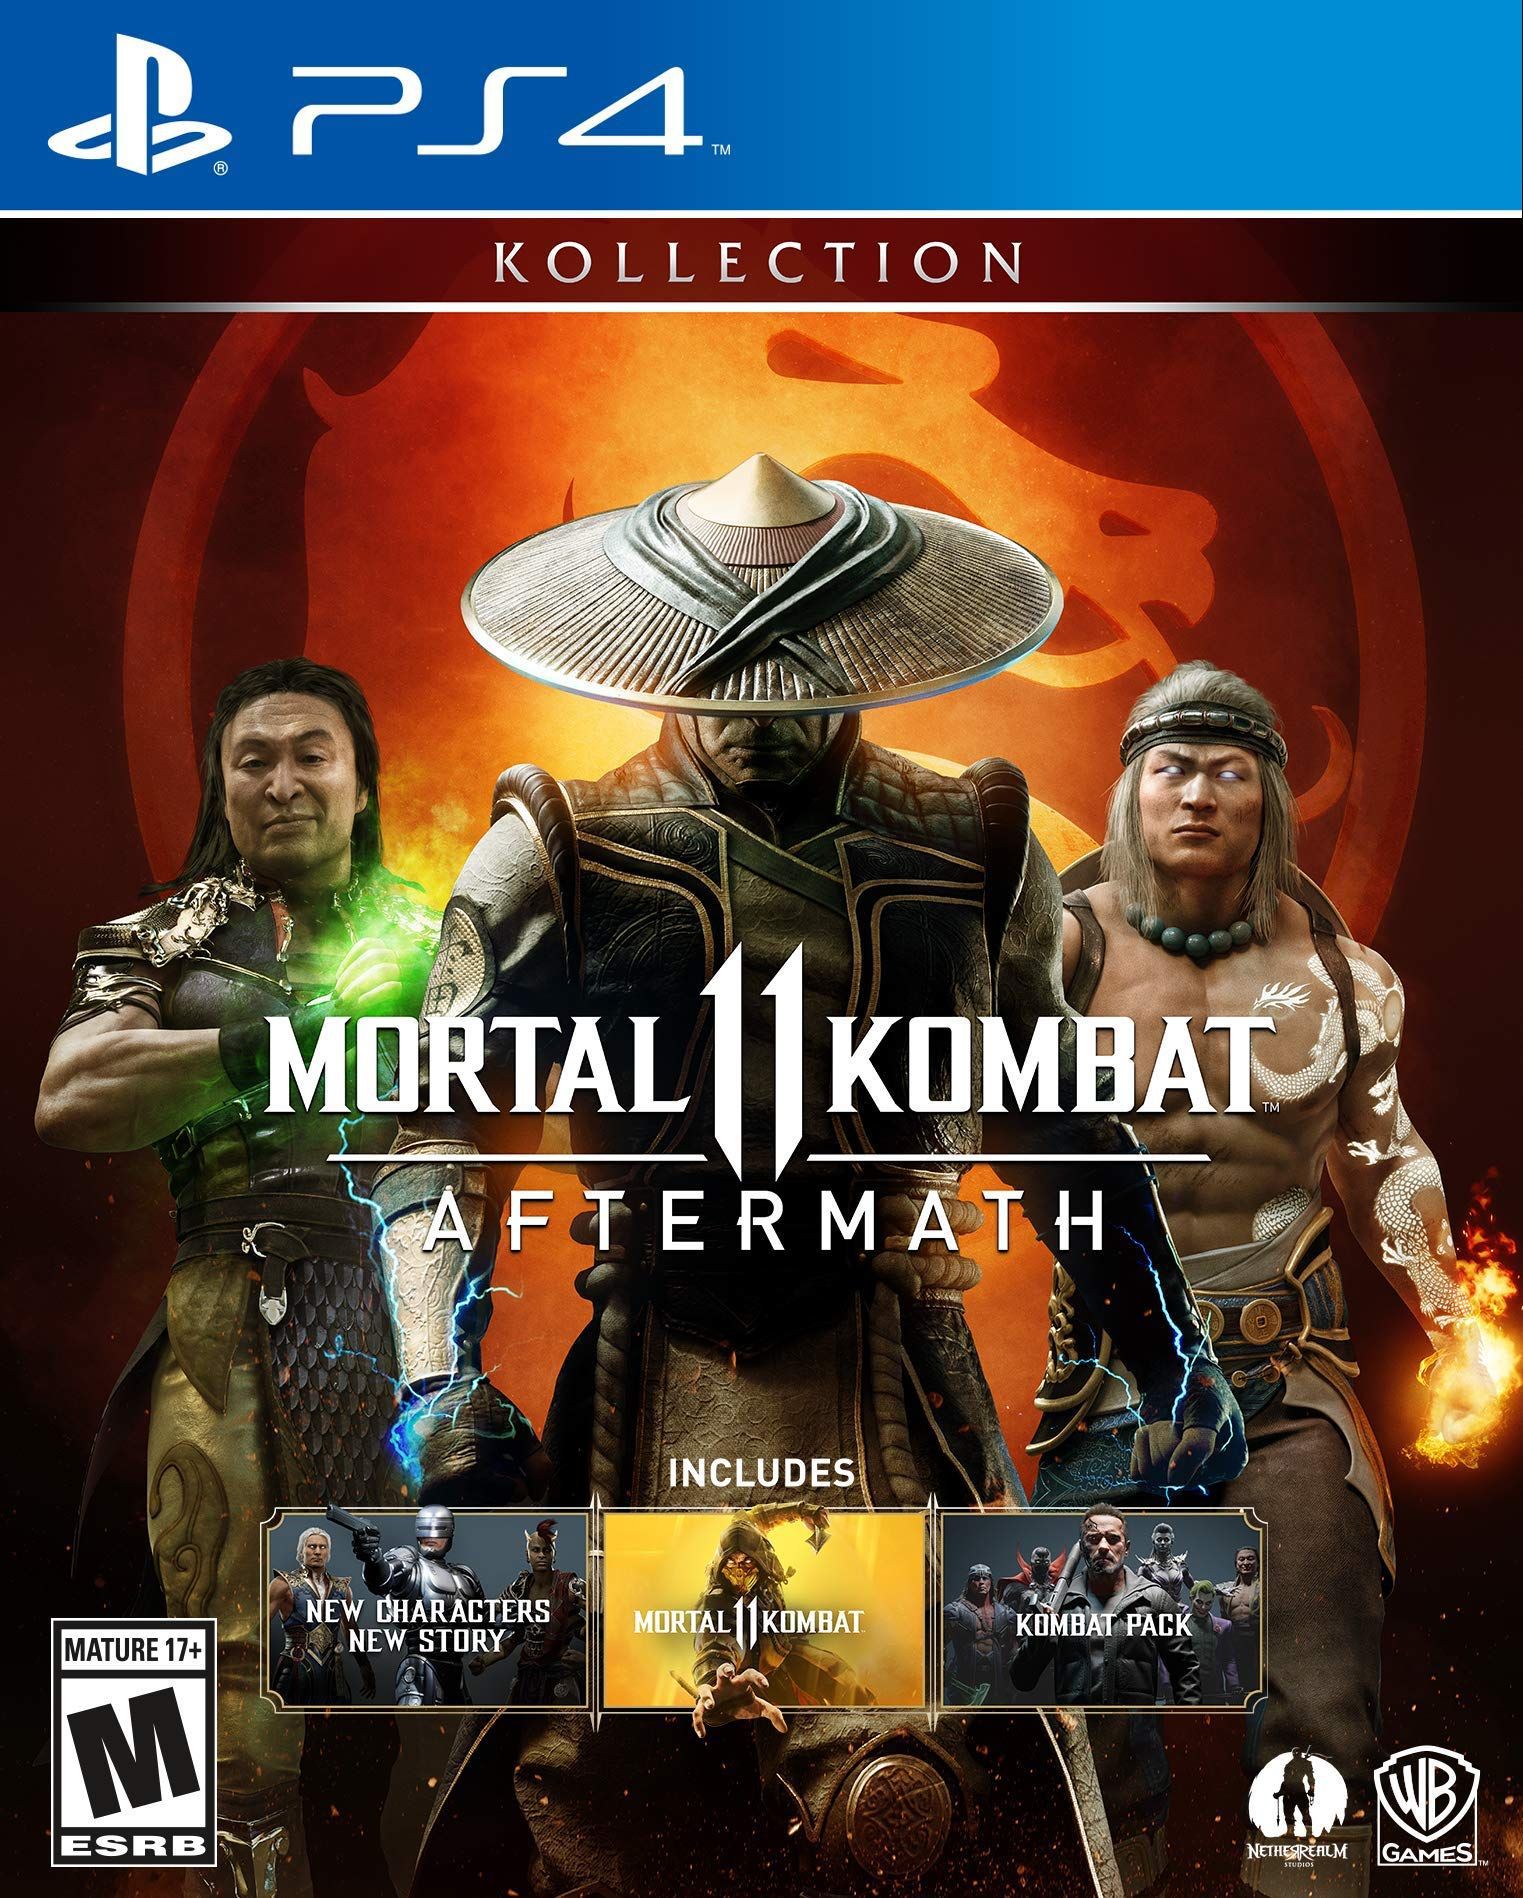 Mortal Kombat 4 chega ao GOG por R$ 11,99